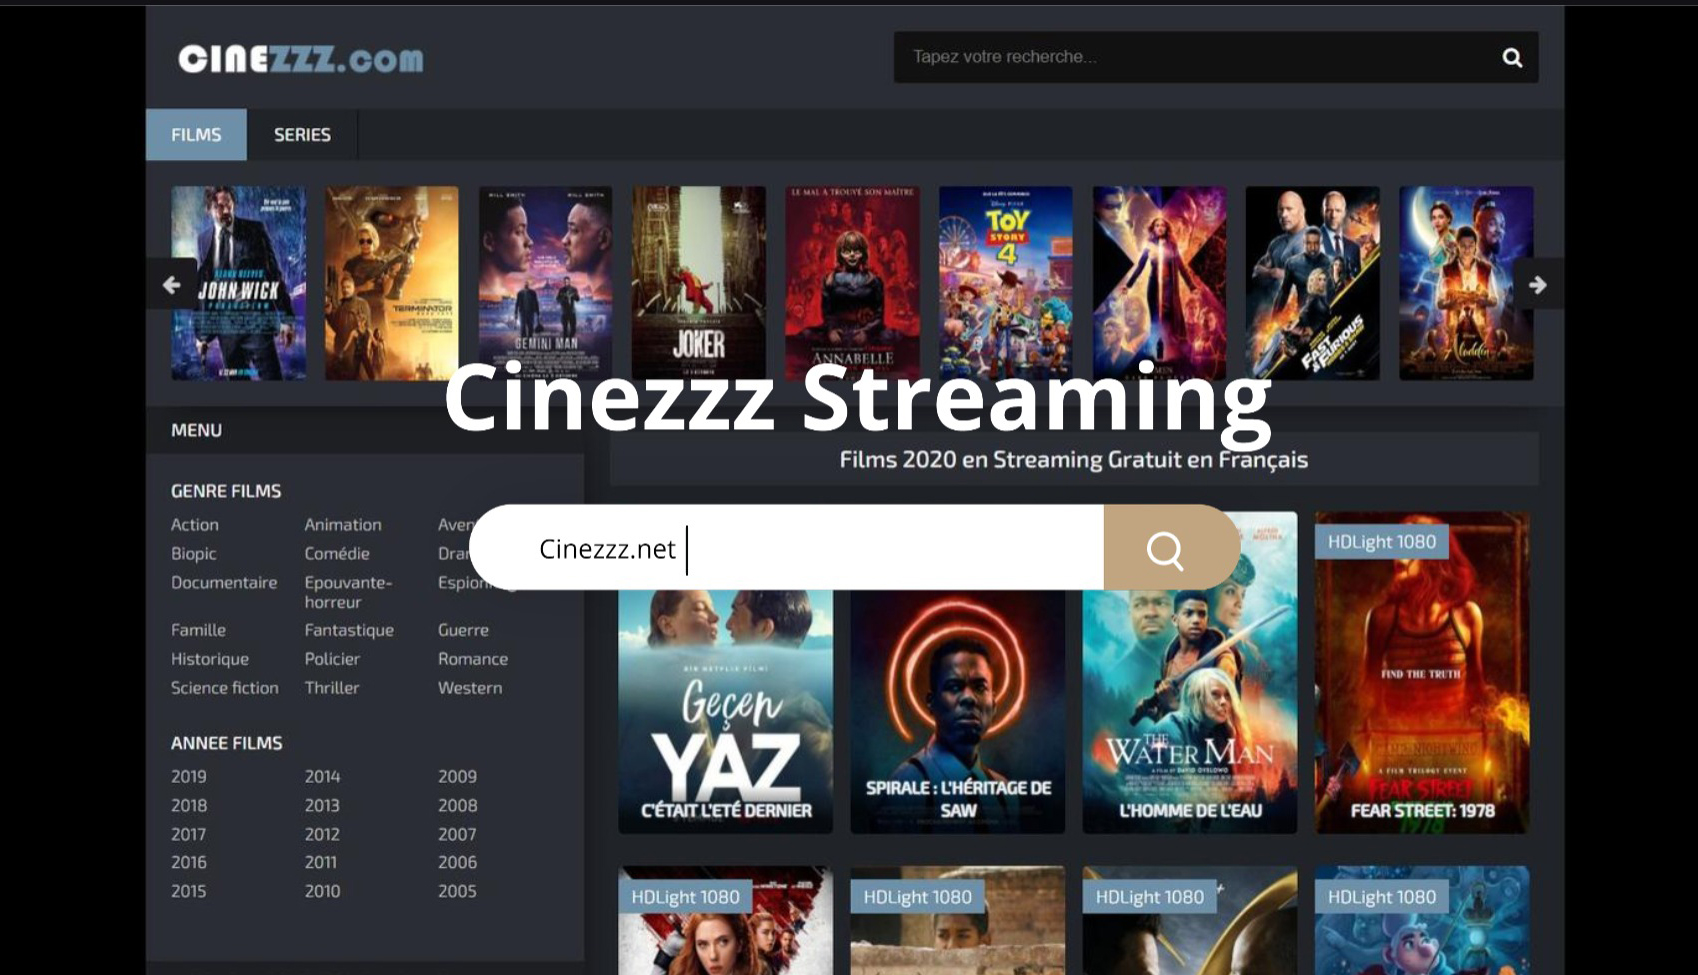 Cinezzz: сайт Free Streaming меняет адрес